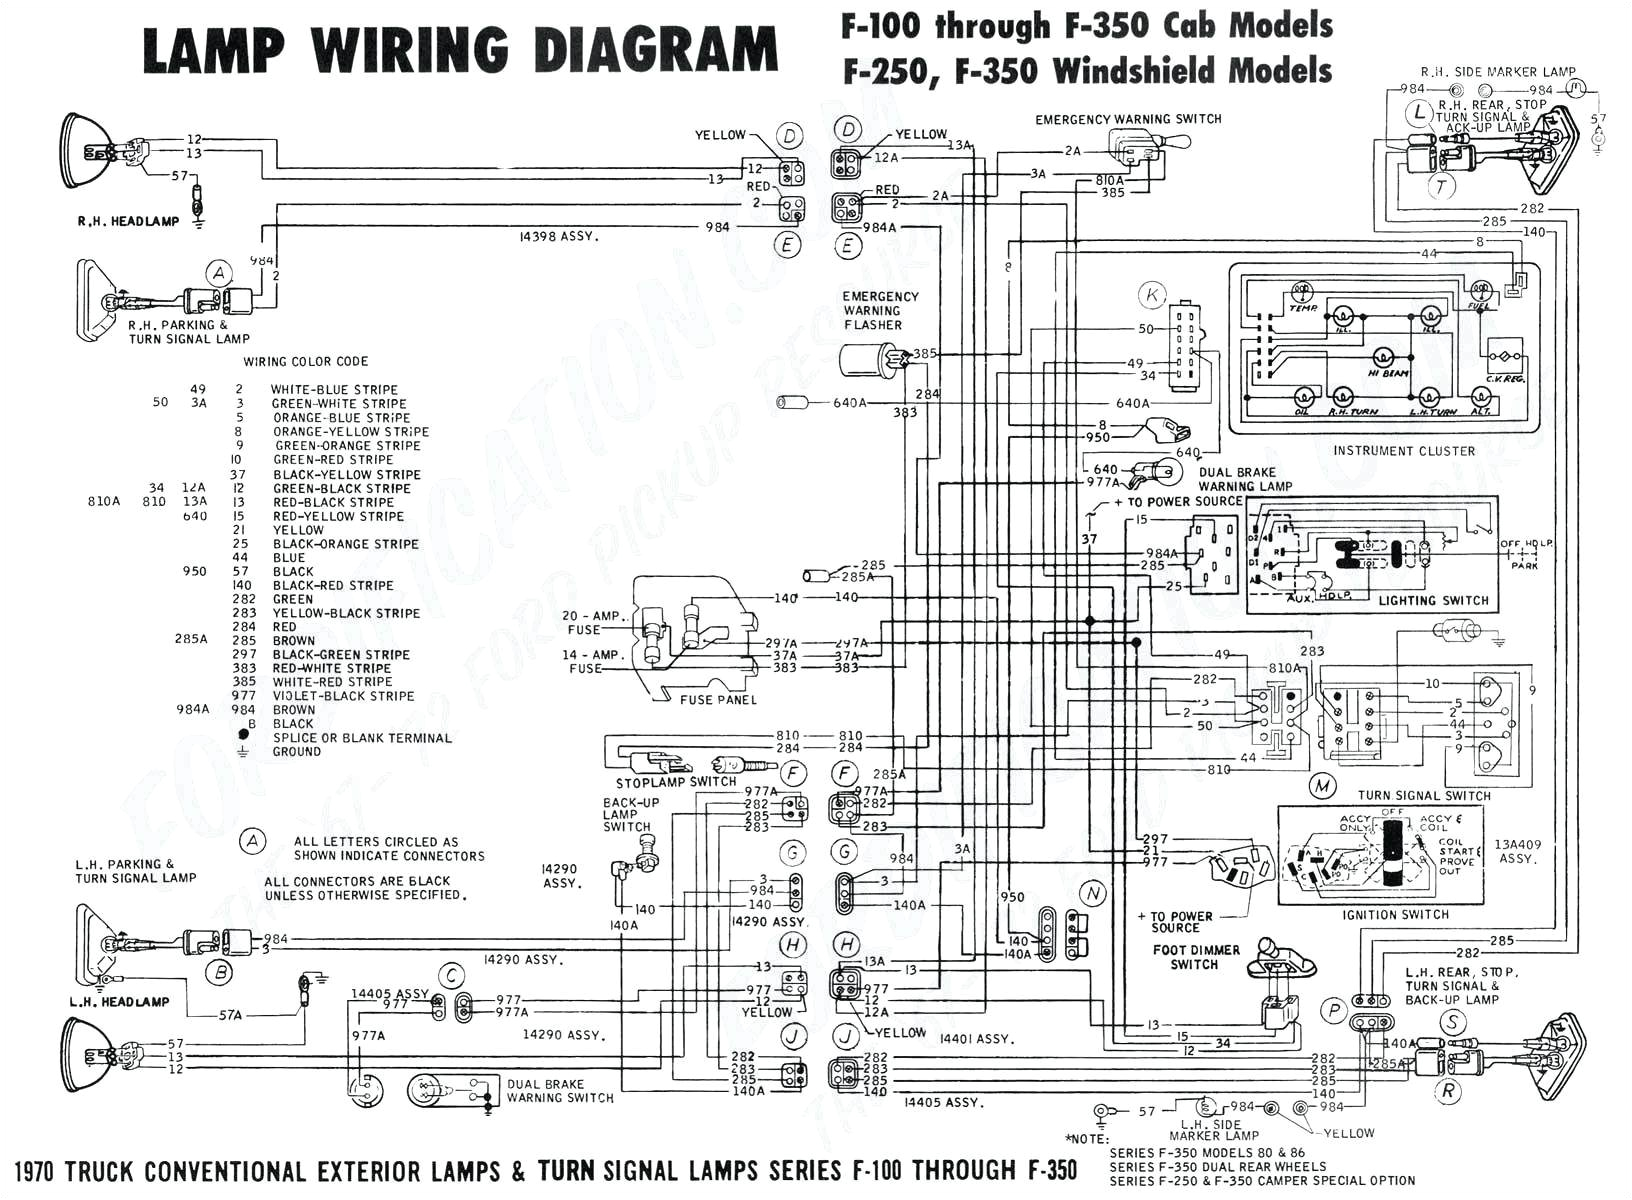 1997 ford explorer fuse panel diagram lzk gallery wiring diagram 2004 ford explorer evap system diagram